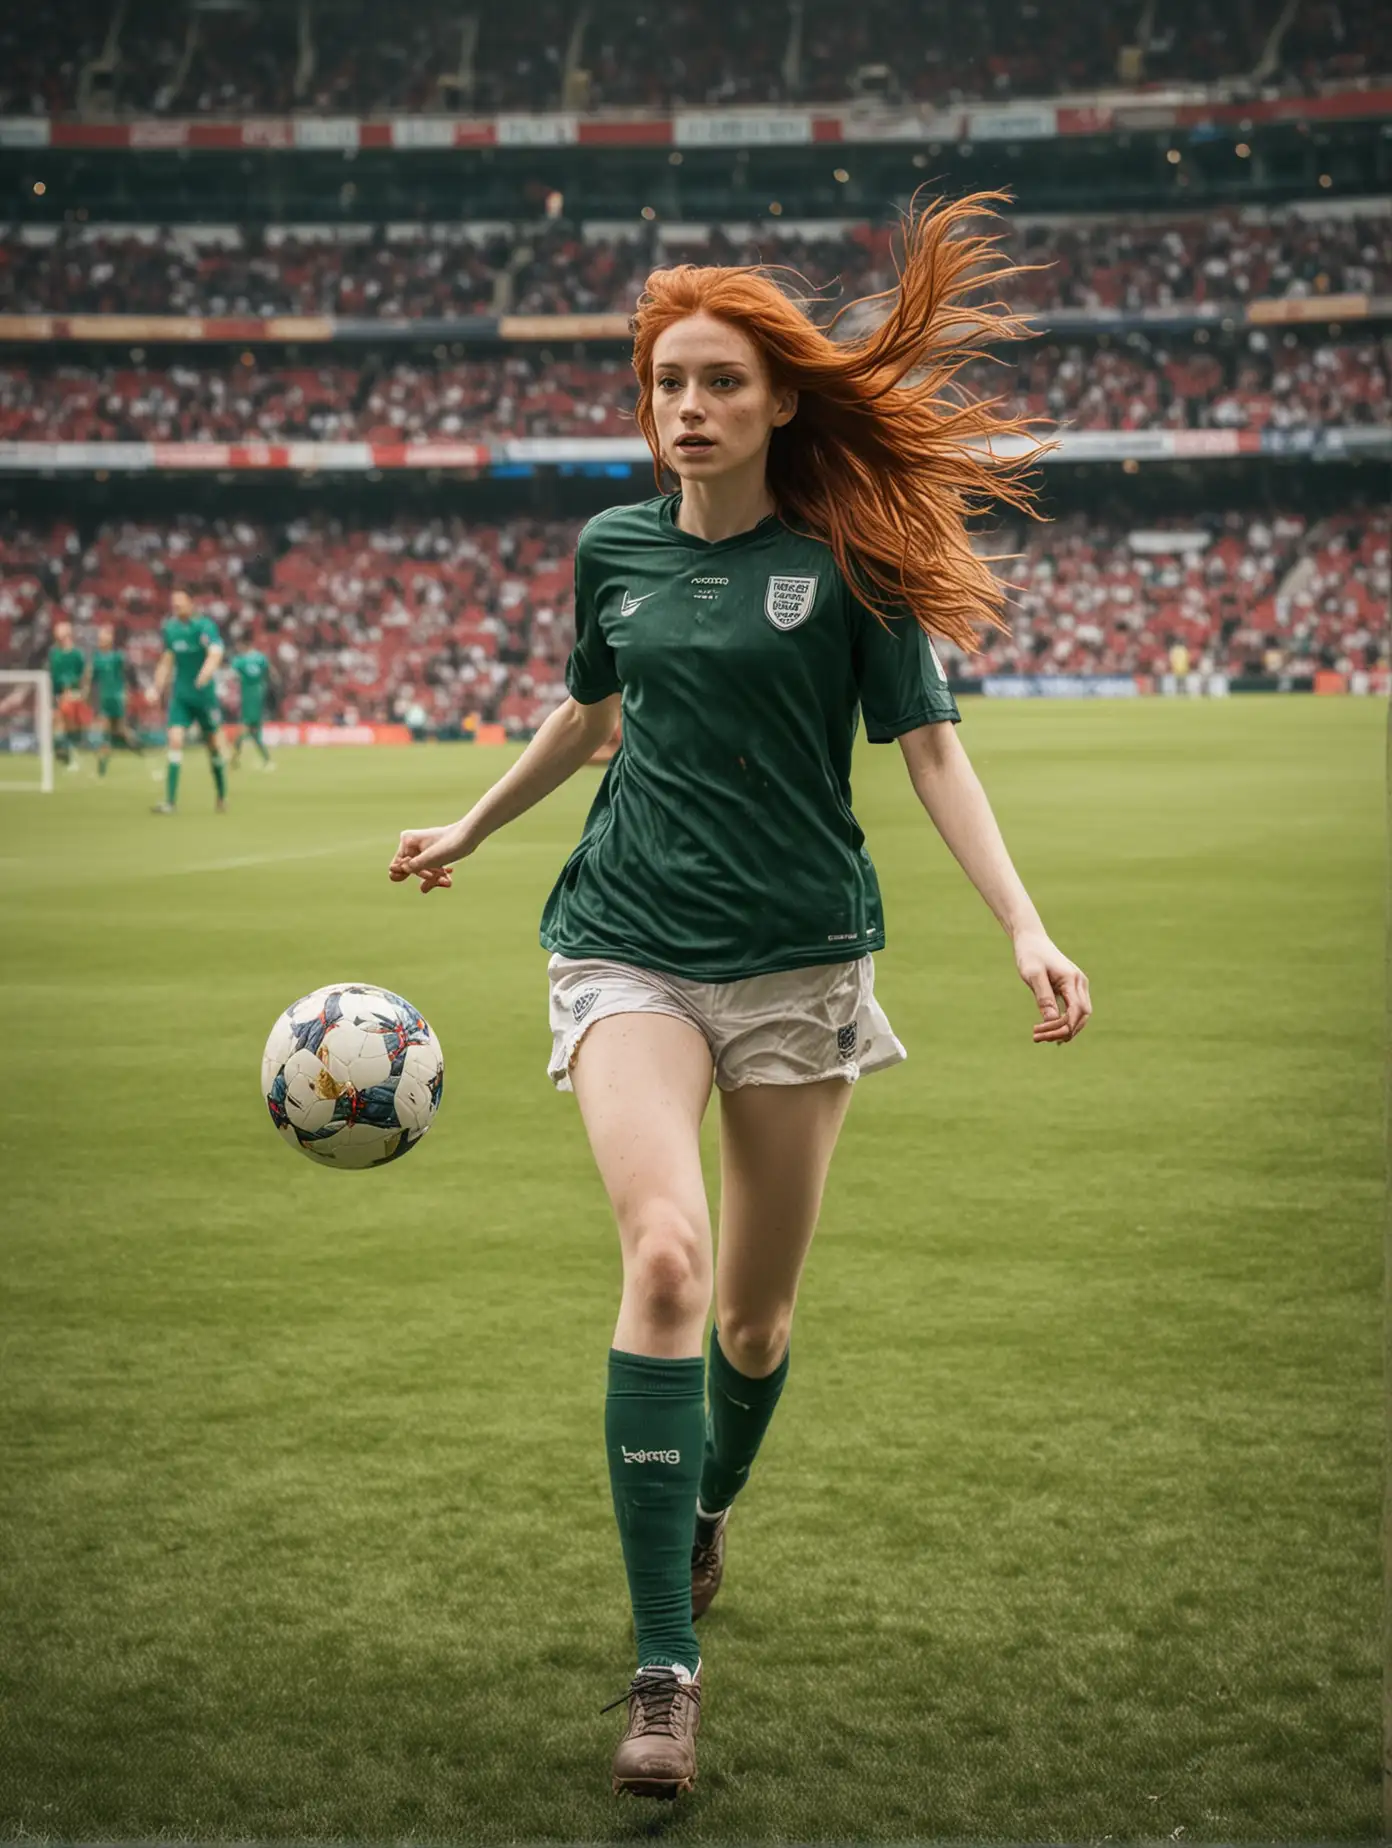 slim redhead with messy medium long hair playing footbal on wembley stadion